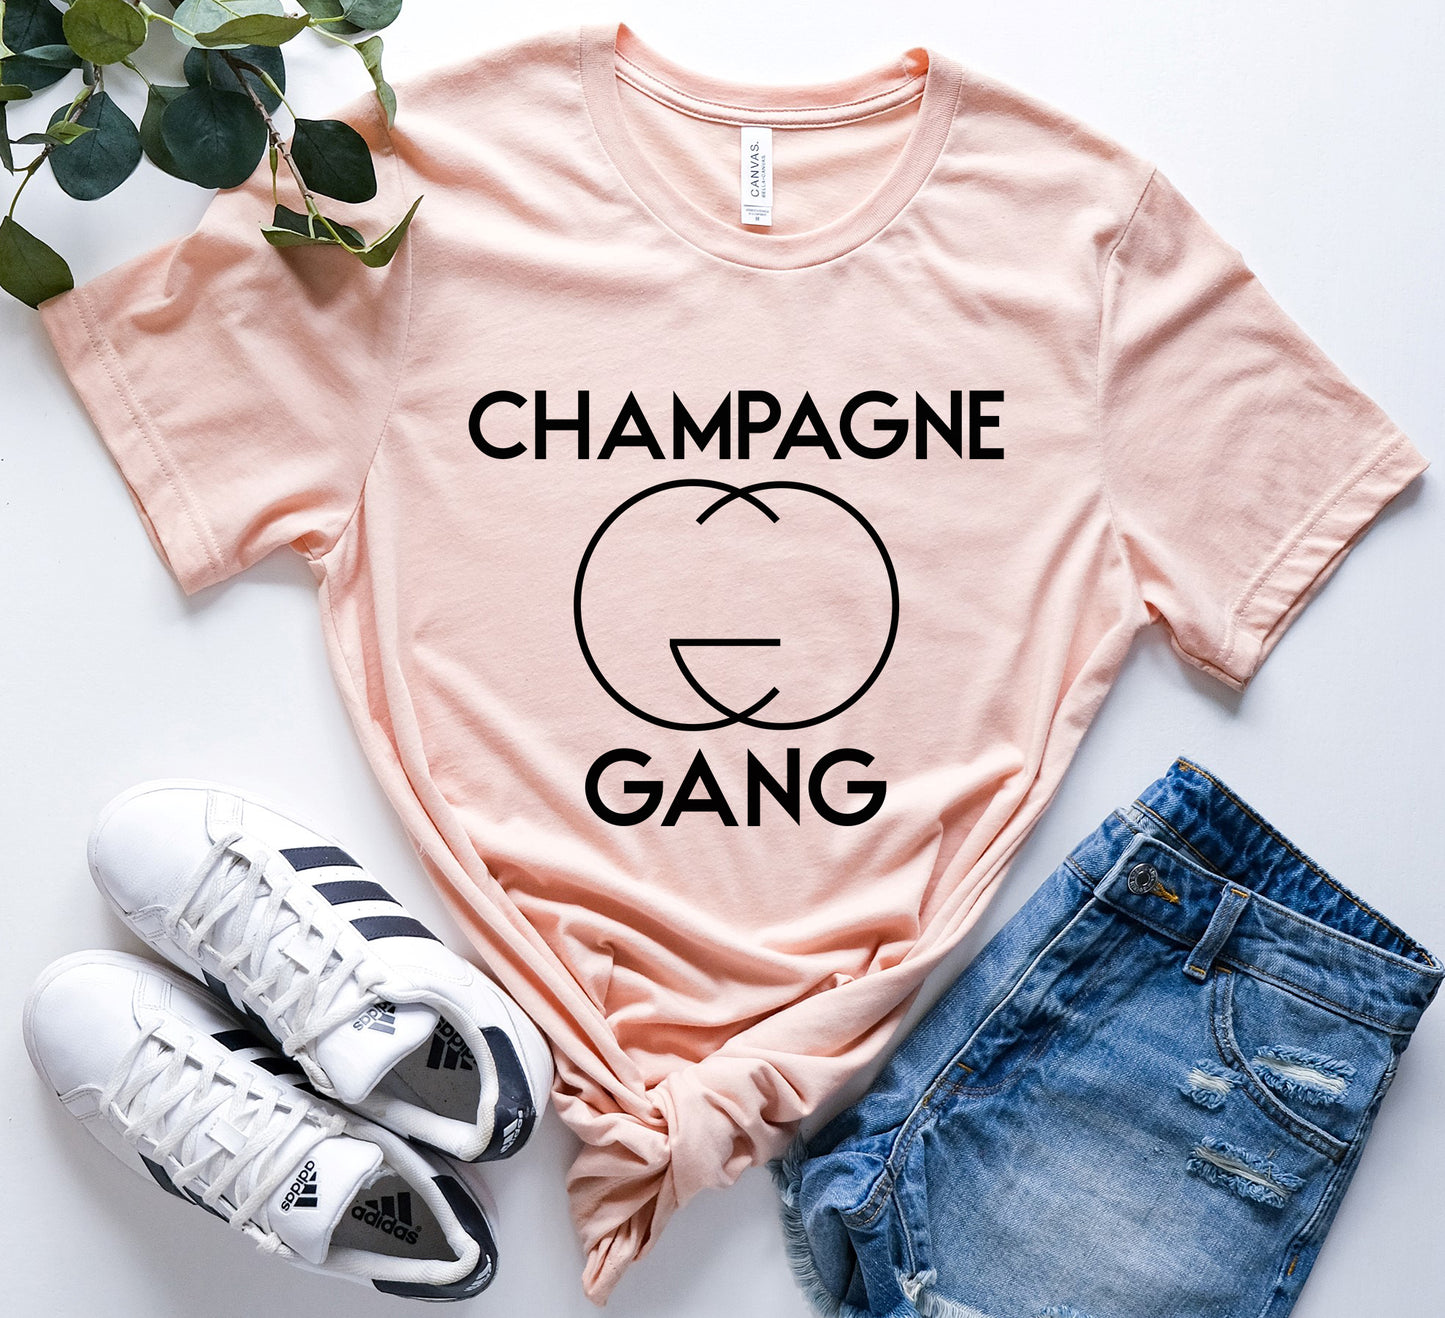 Champagne Gang Tee